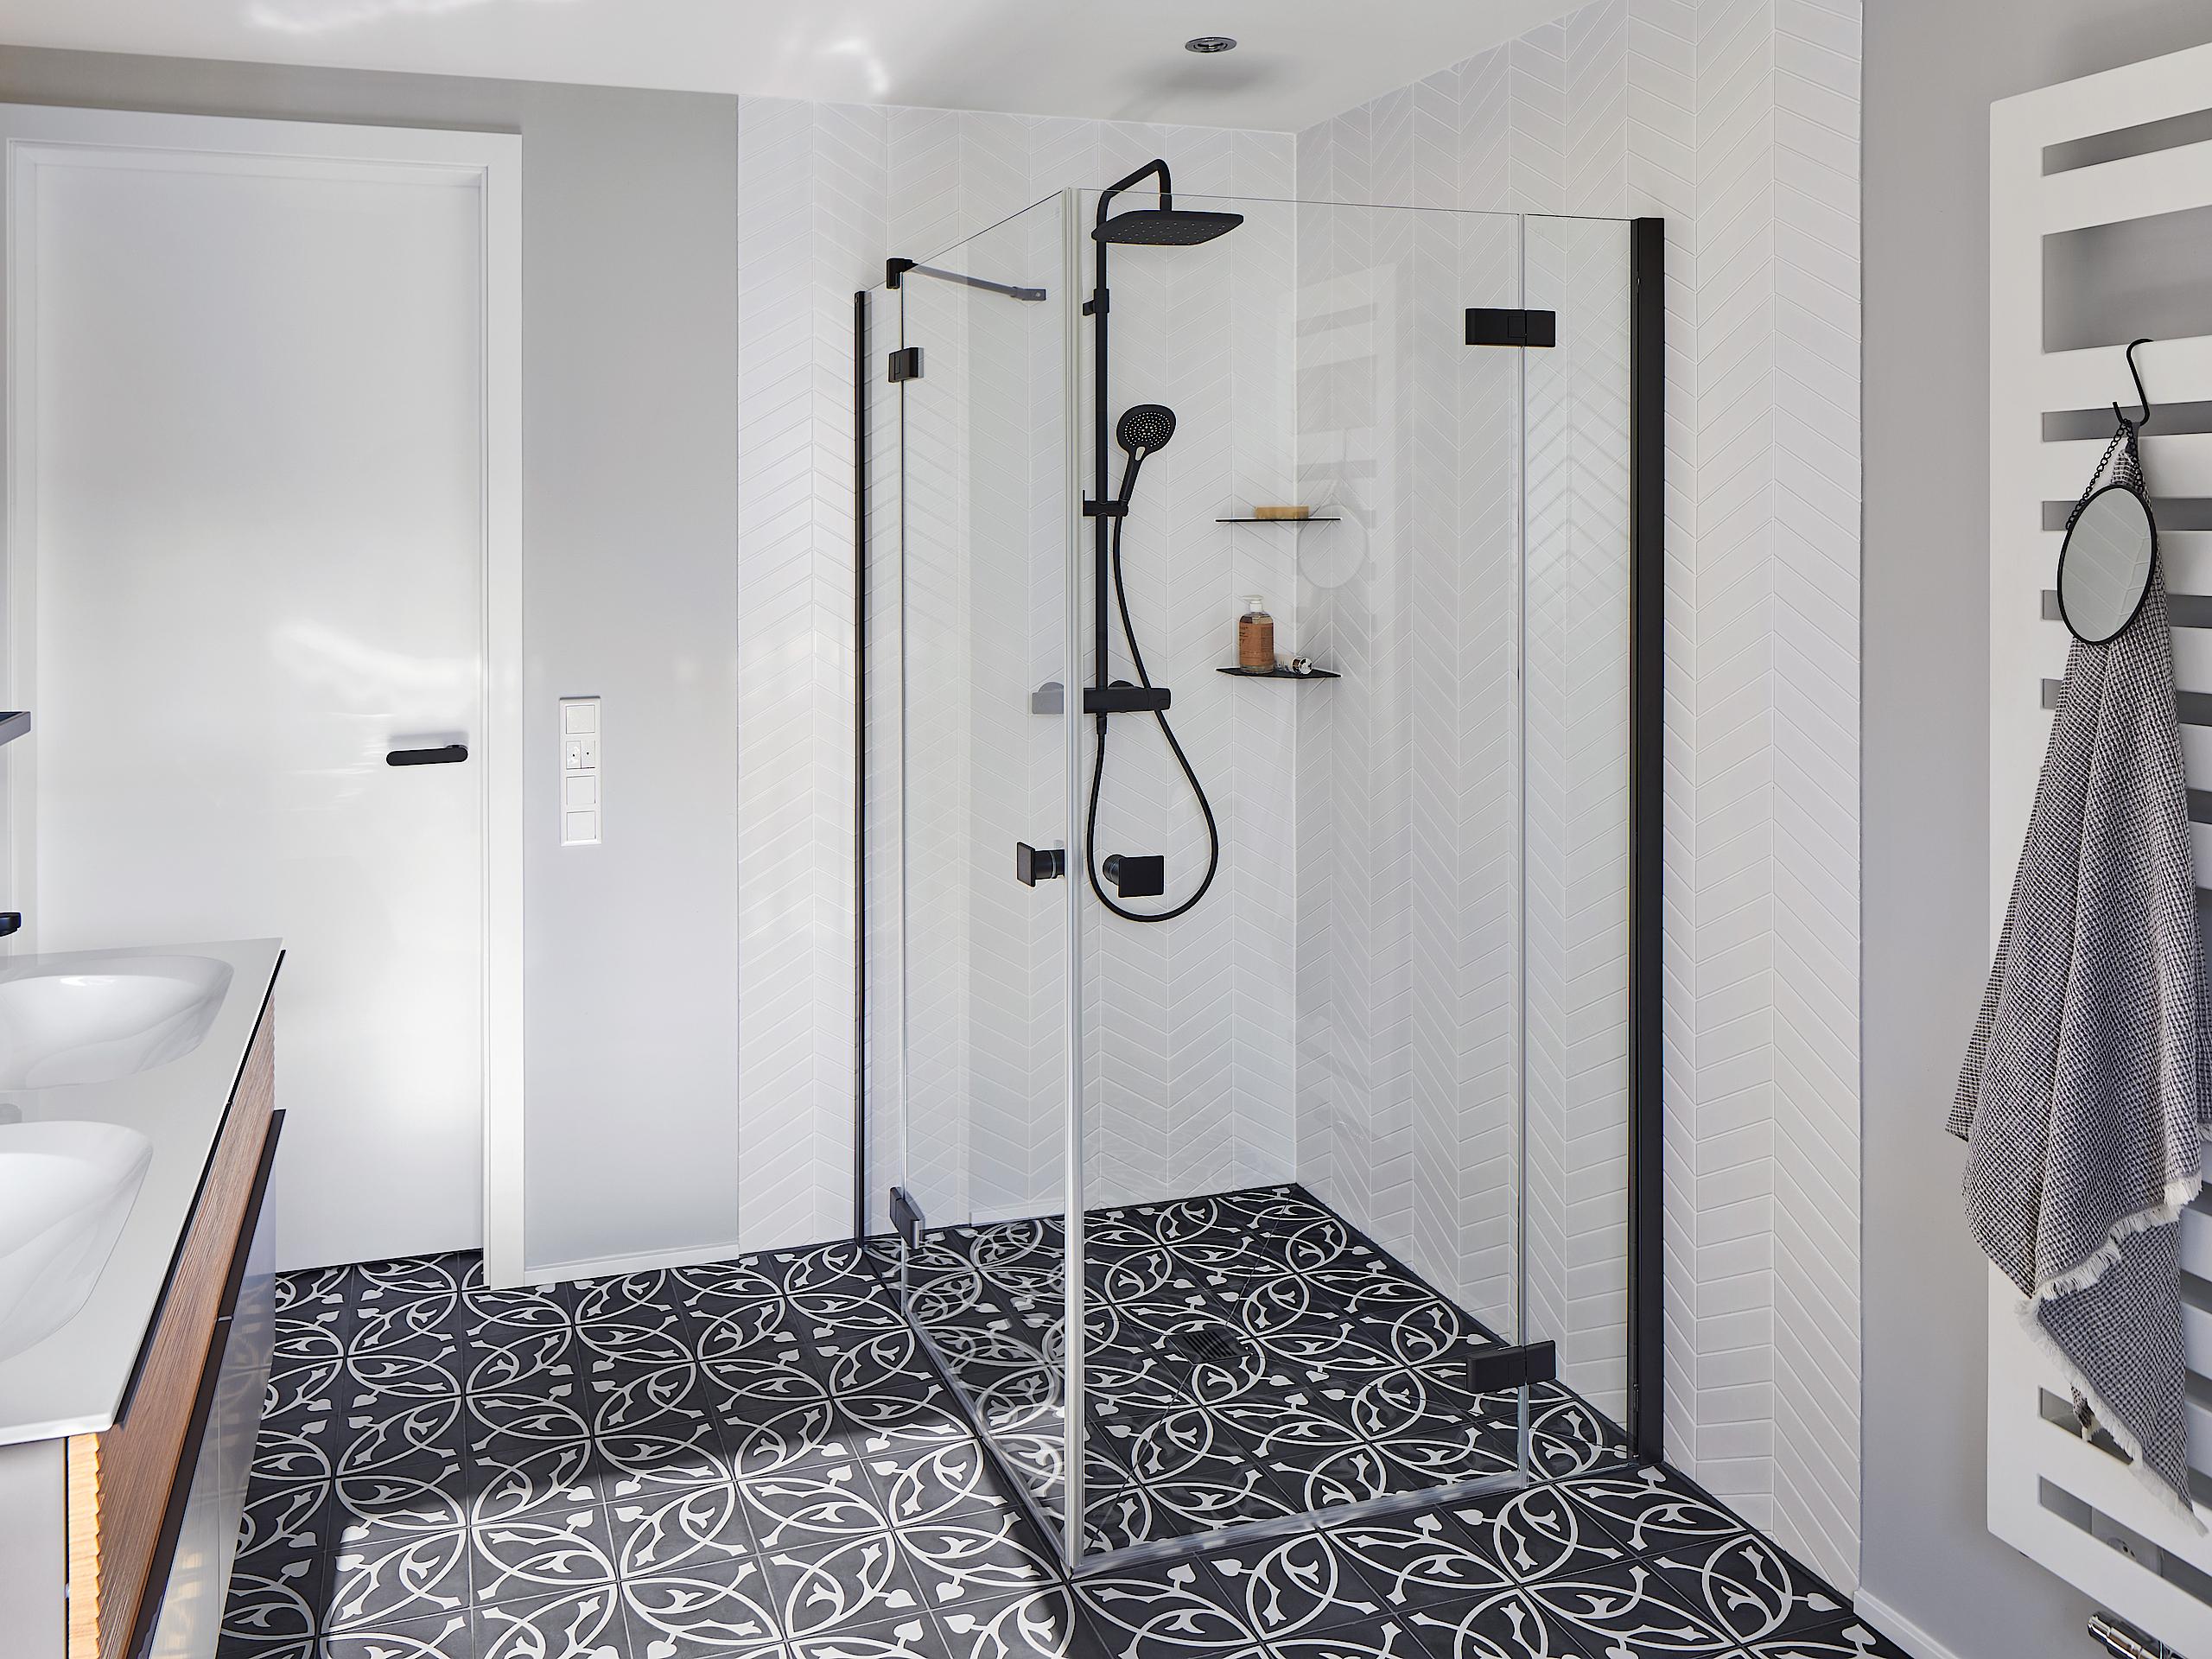 Kermi shower enclosure MENA in timeless Black & White